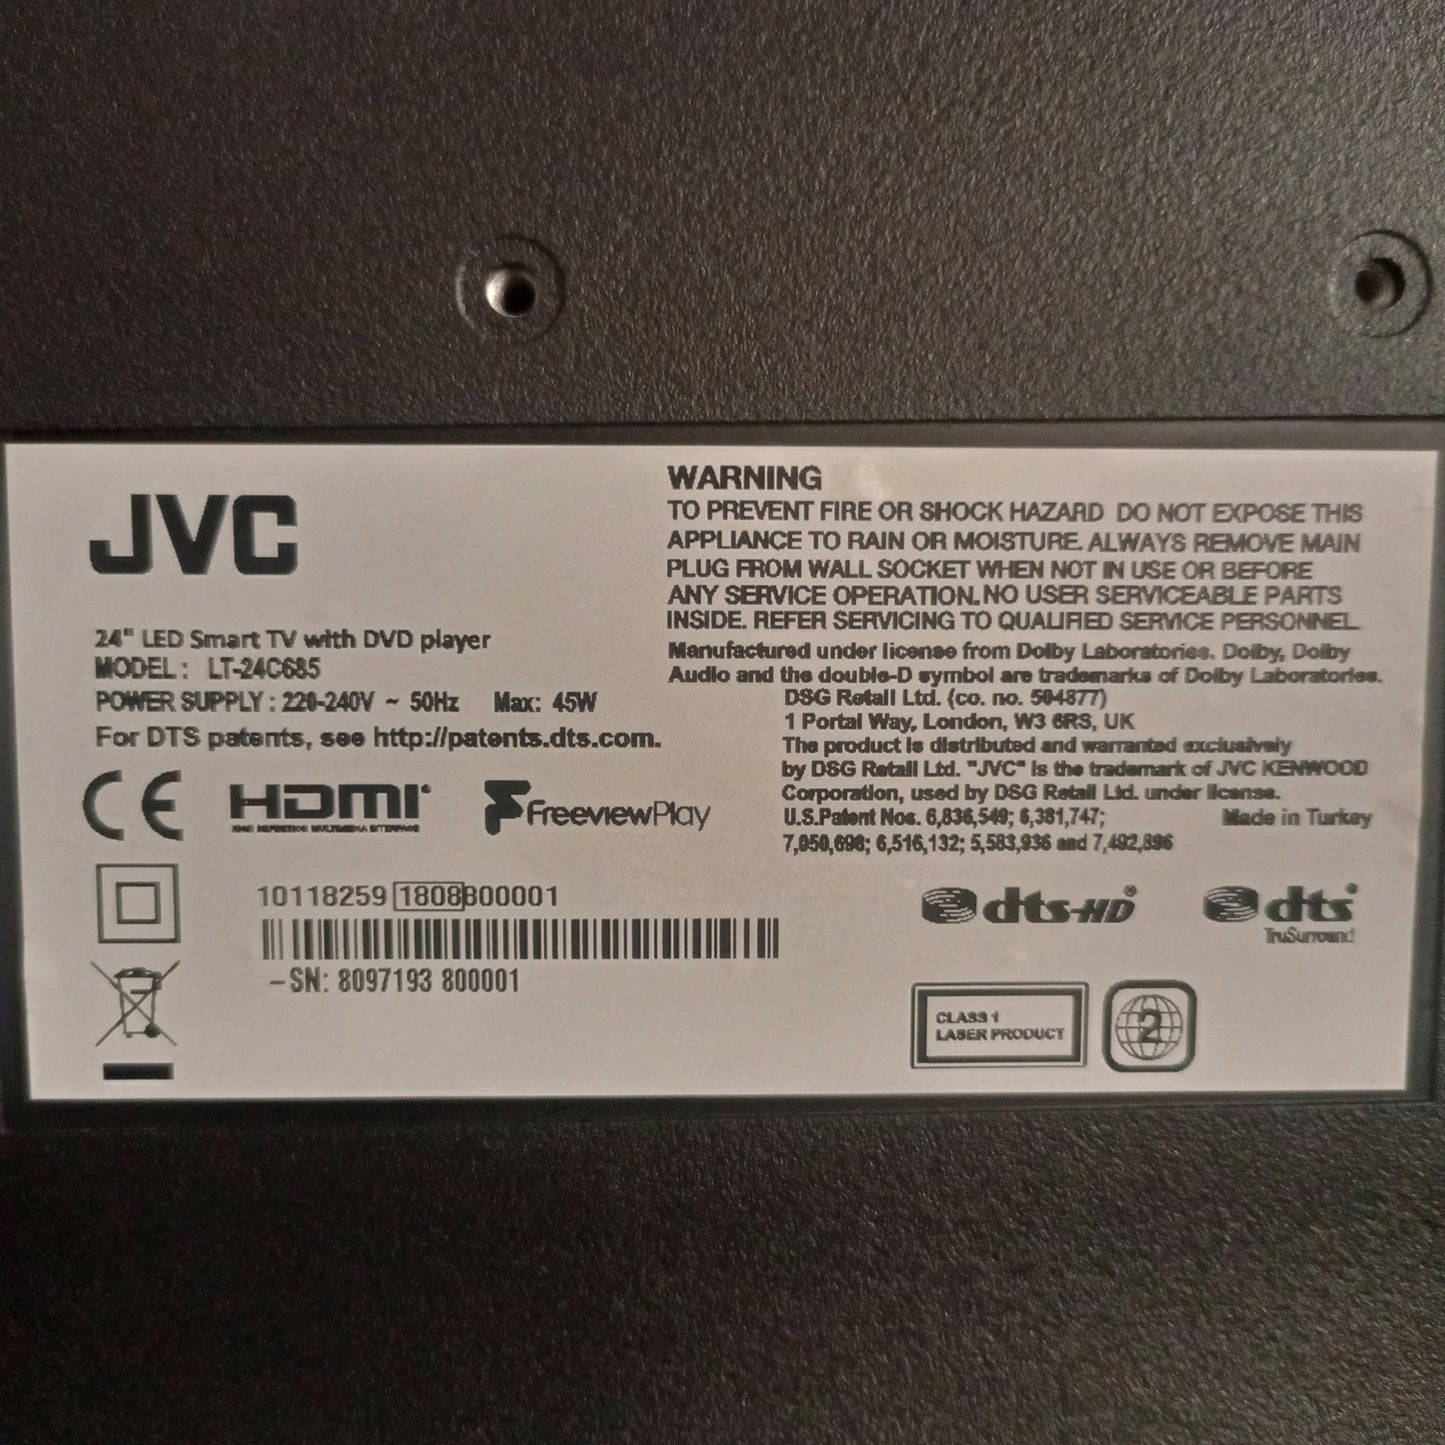 JVC 24 inch LT-24C685 Smart Full HD LED TV (DVD Combo) + Built-in WiFi - Model number View